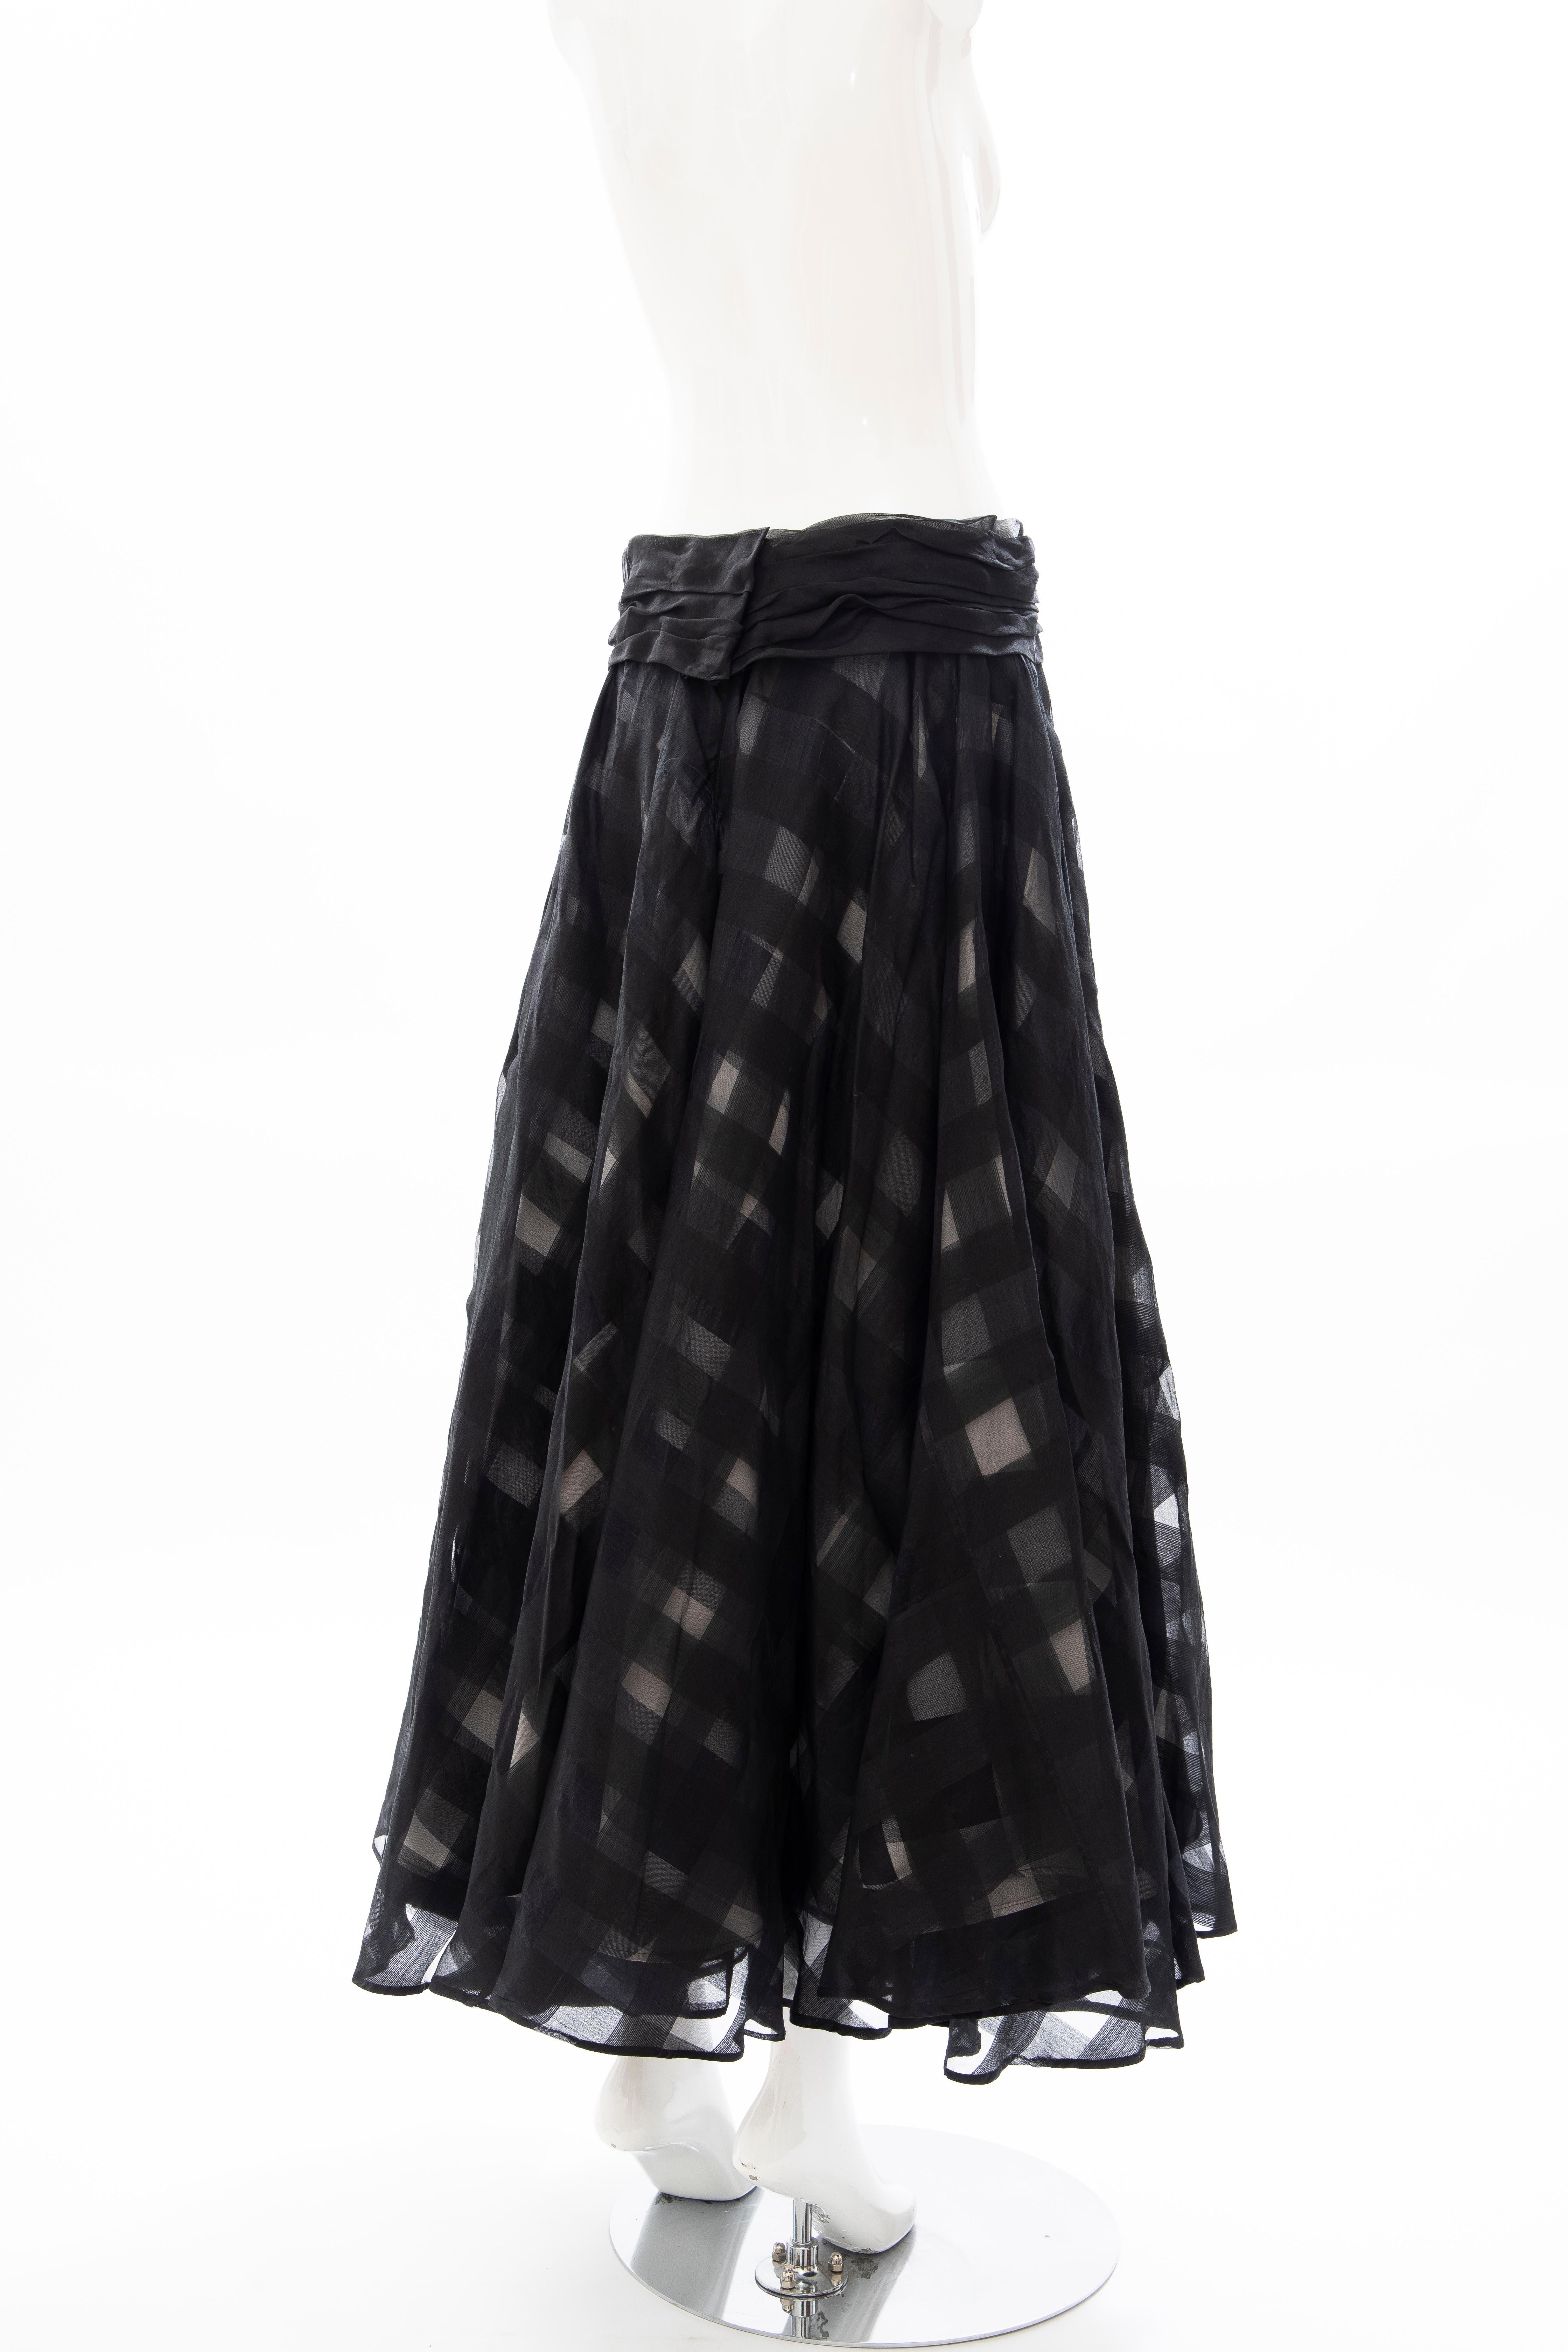 Olivier Theyskens Runway Black Silk Checkerboard Pattern Skirt, Spring 2000 For Sale 5